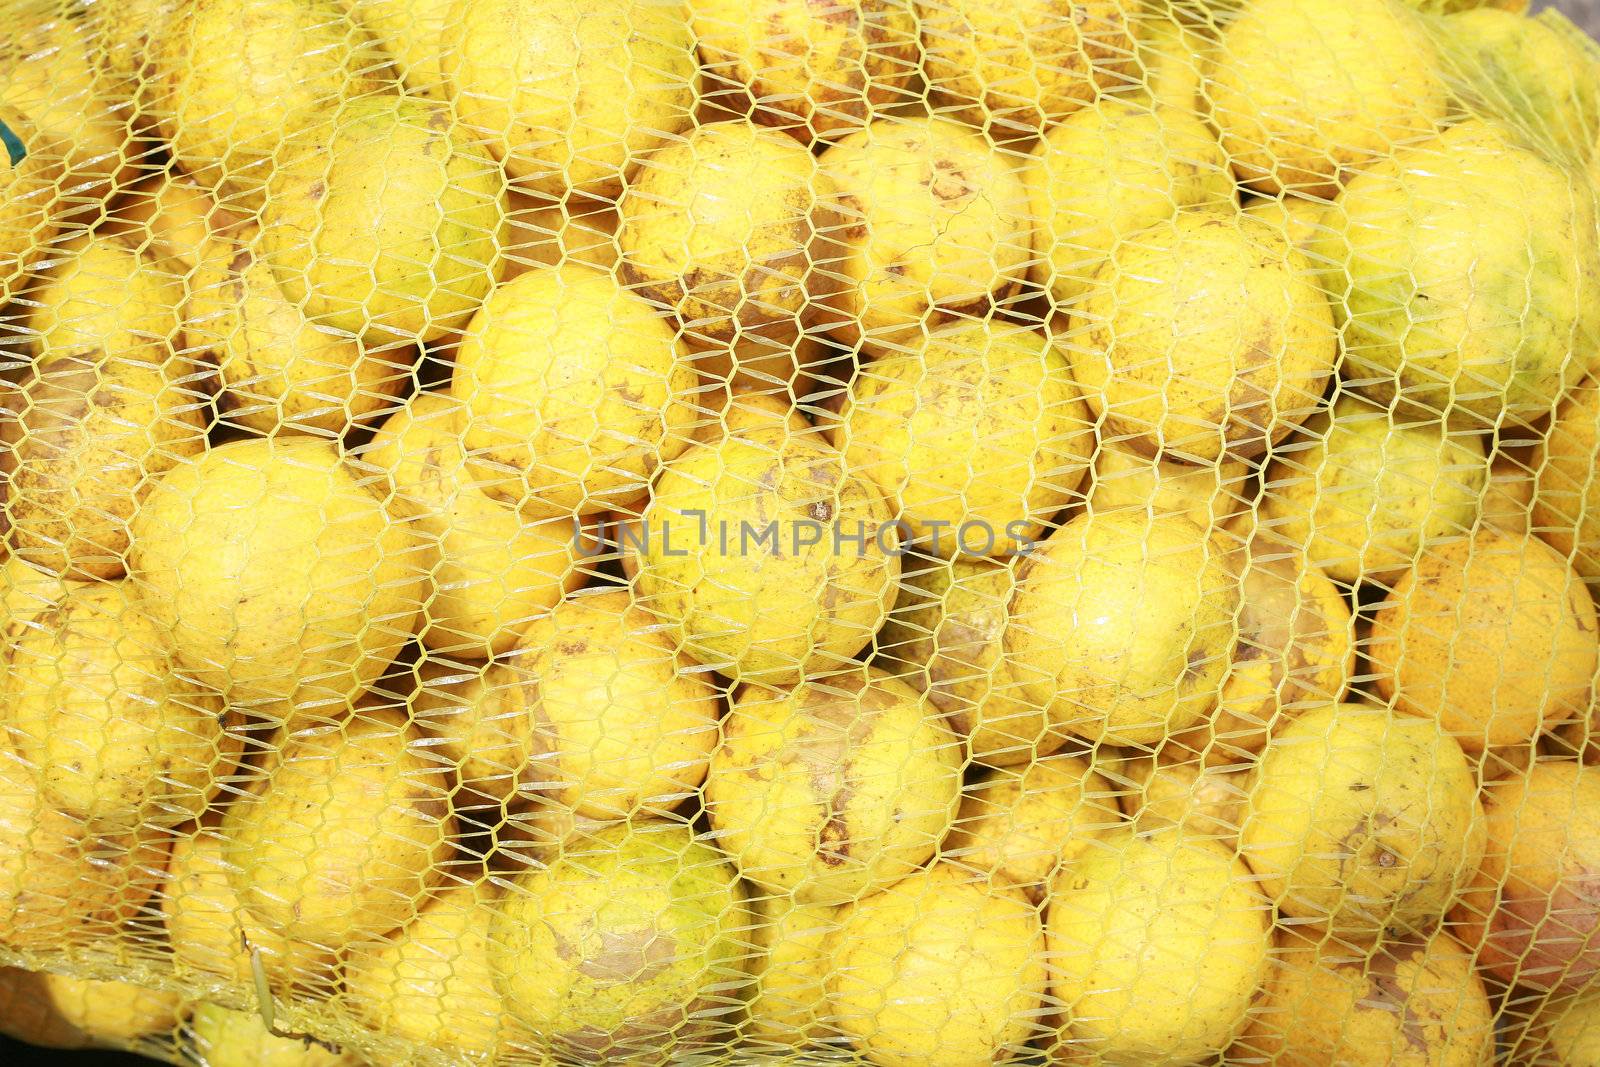 Oranges in mesh bag series